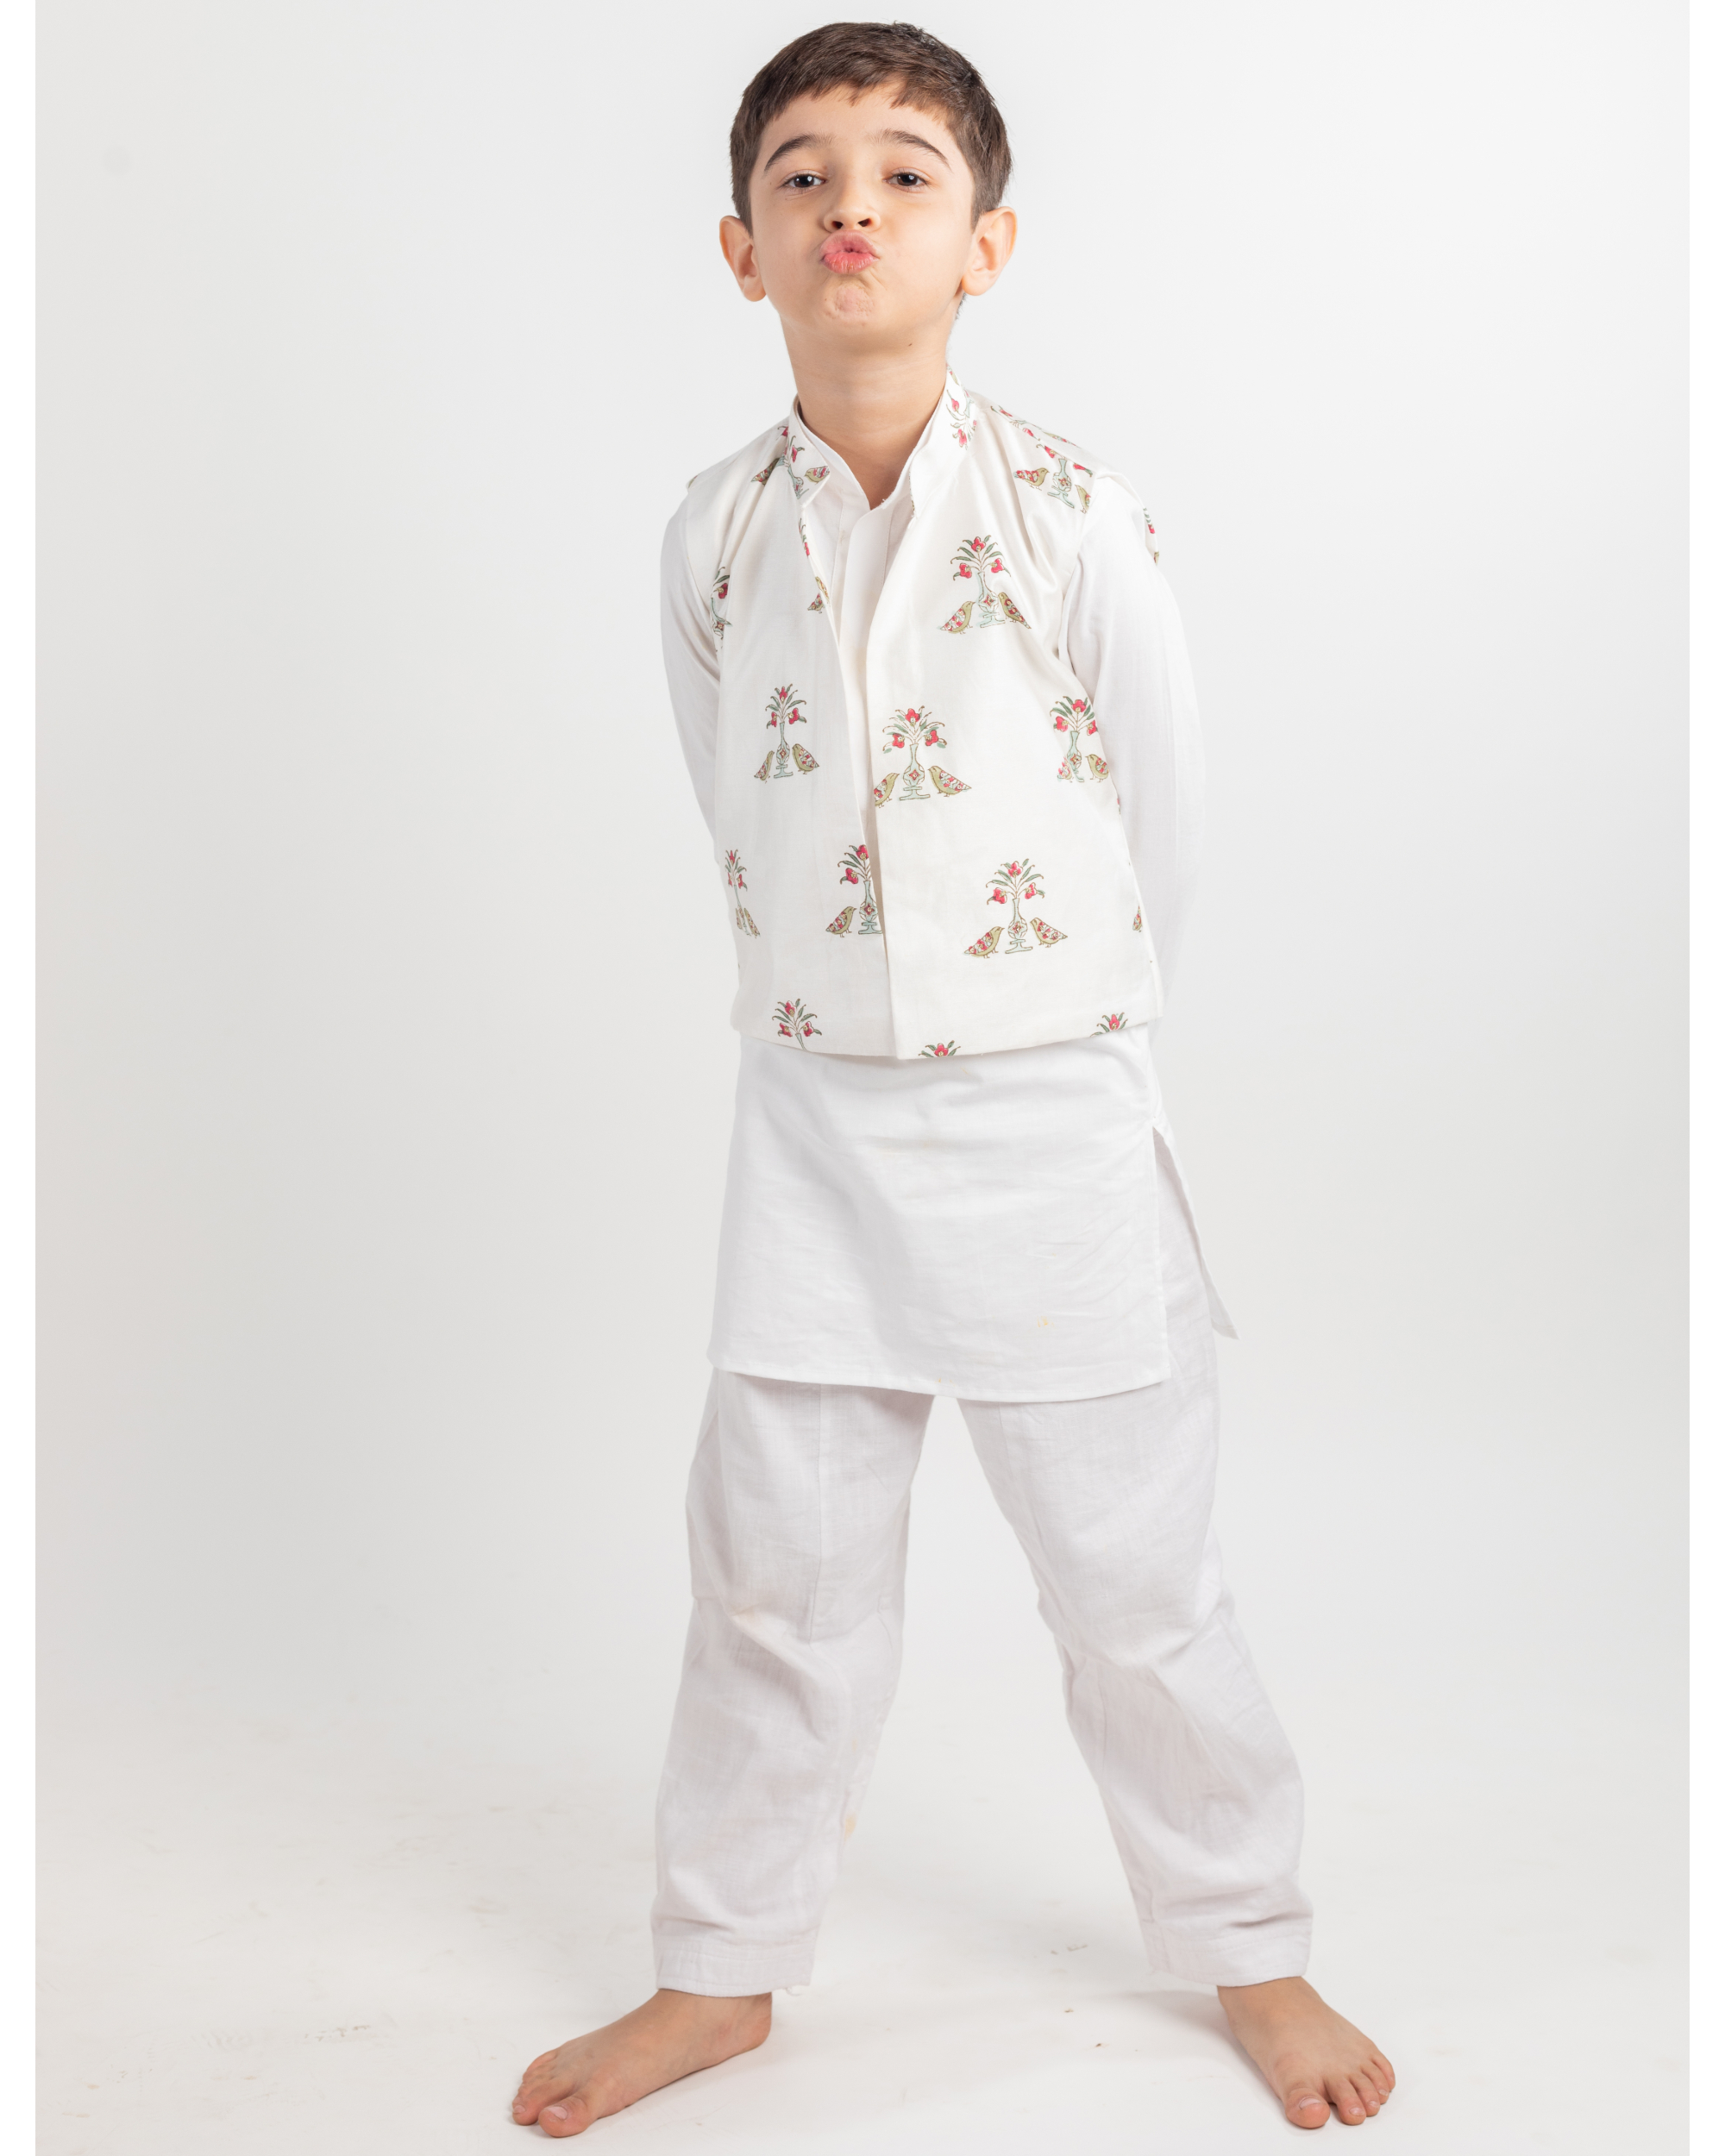 White birdkurta with pyjama and jacket set - set of three